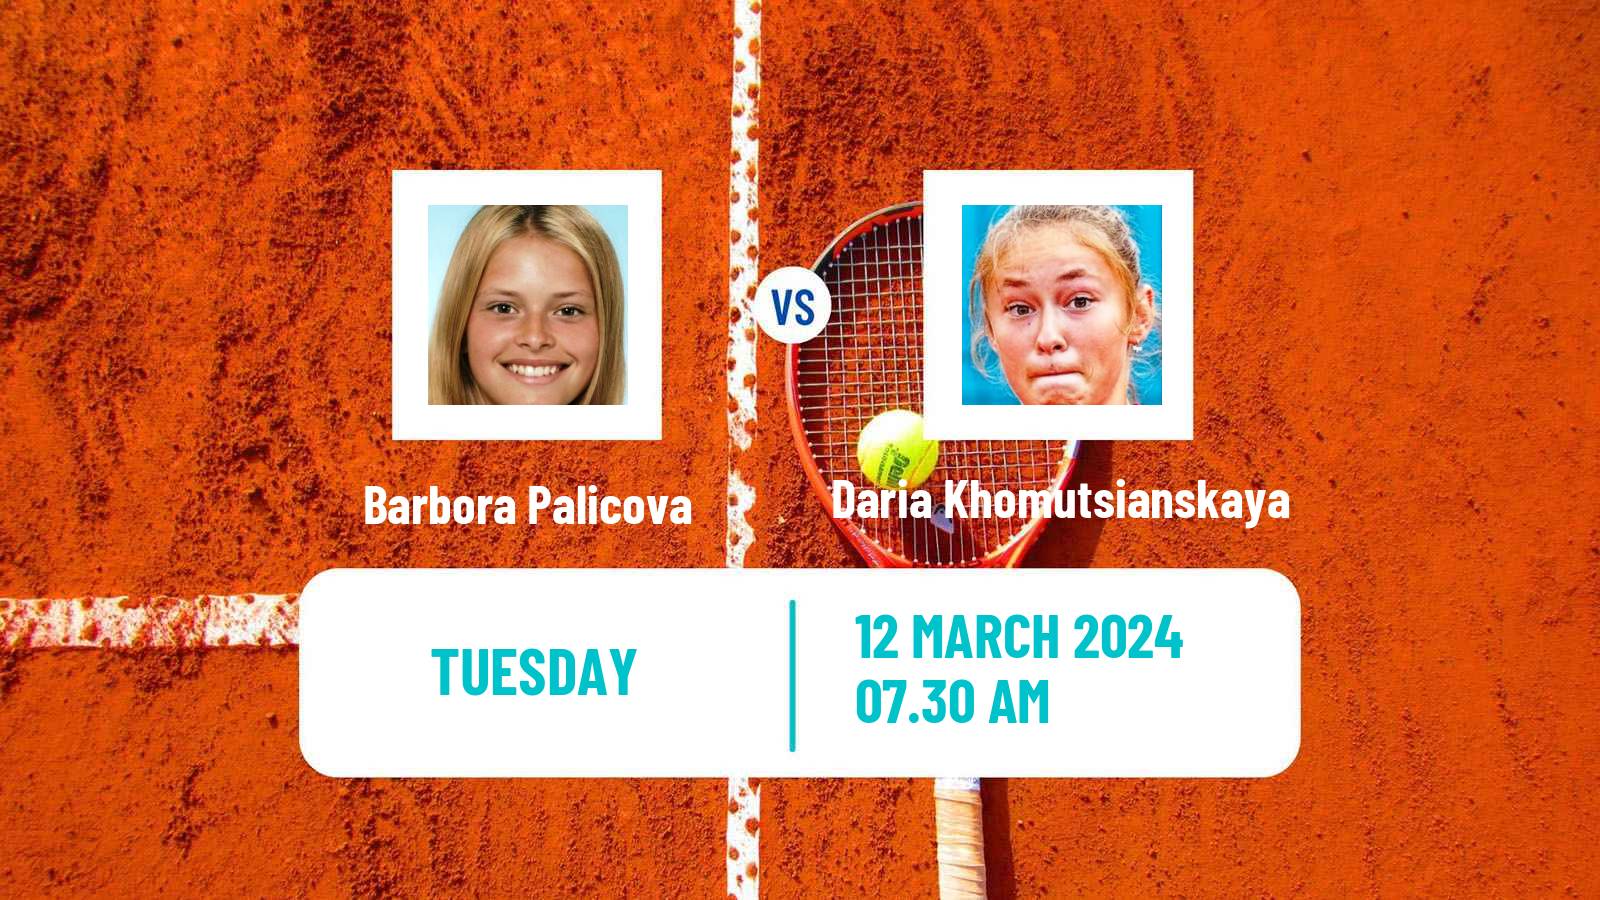 Tennis ITF W35 Solarino 2 Women Barbora Palicova - Daria Khomutsianskaya